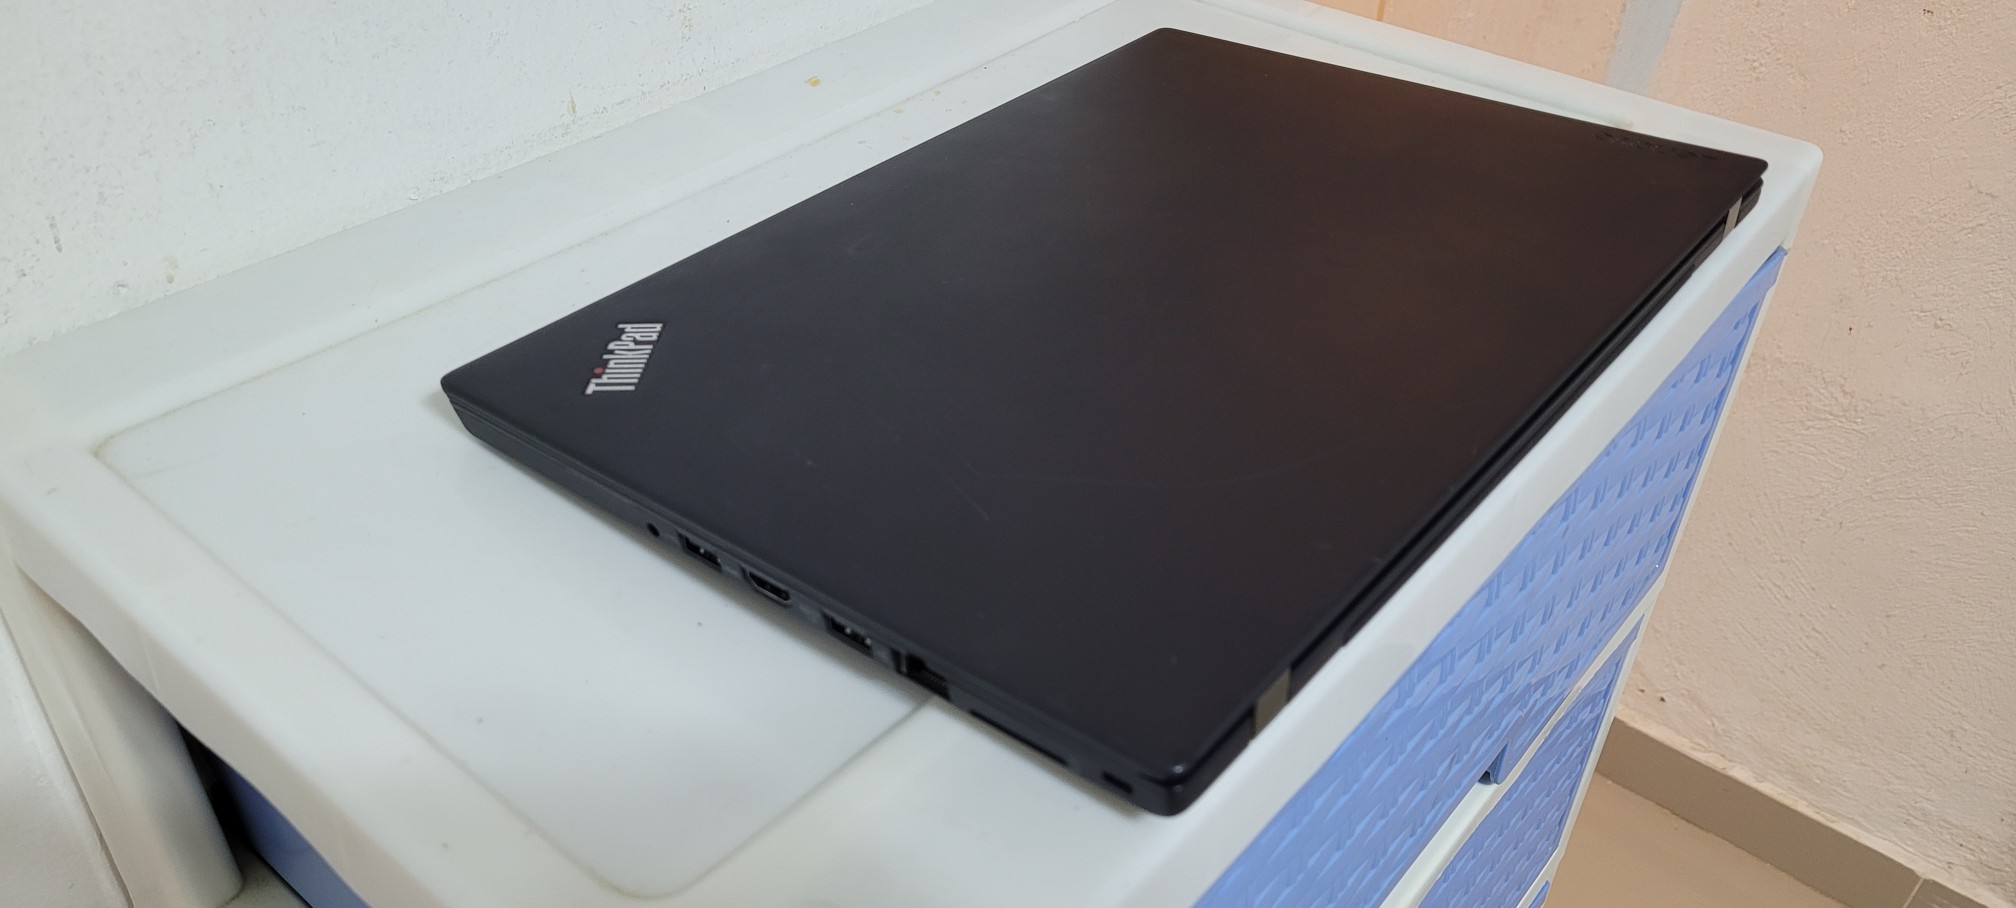 computadoras y laptops - Lenovo 14 Pulg Core i7 Ram 8gb Disco 256gb Solido hdmi 2